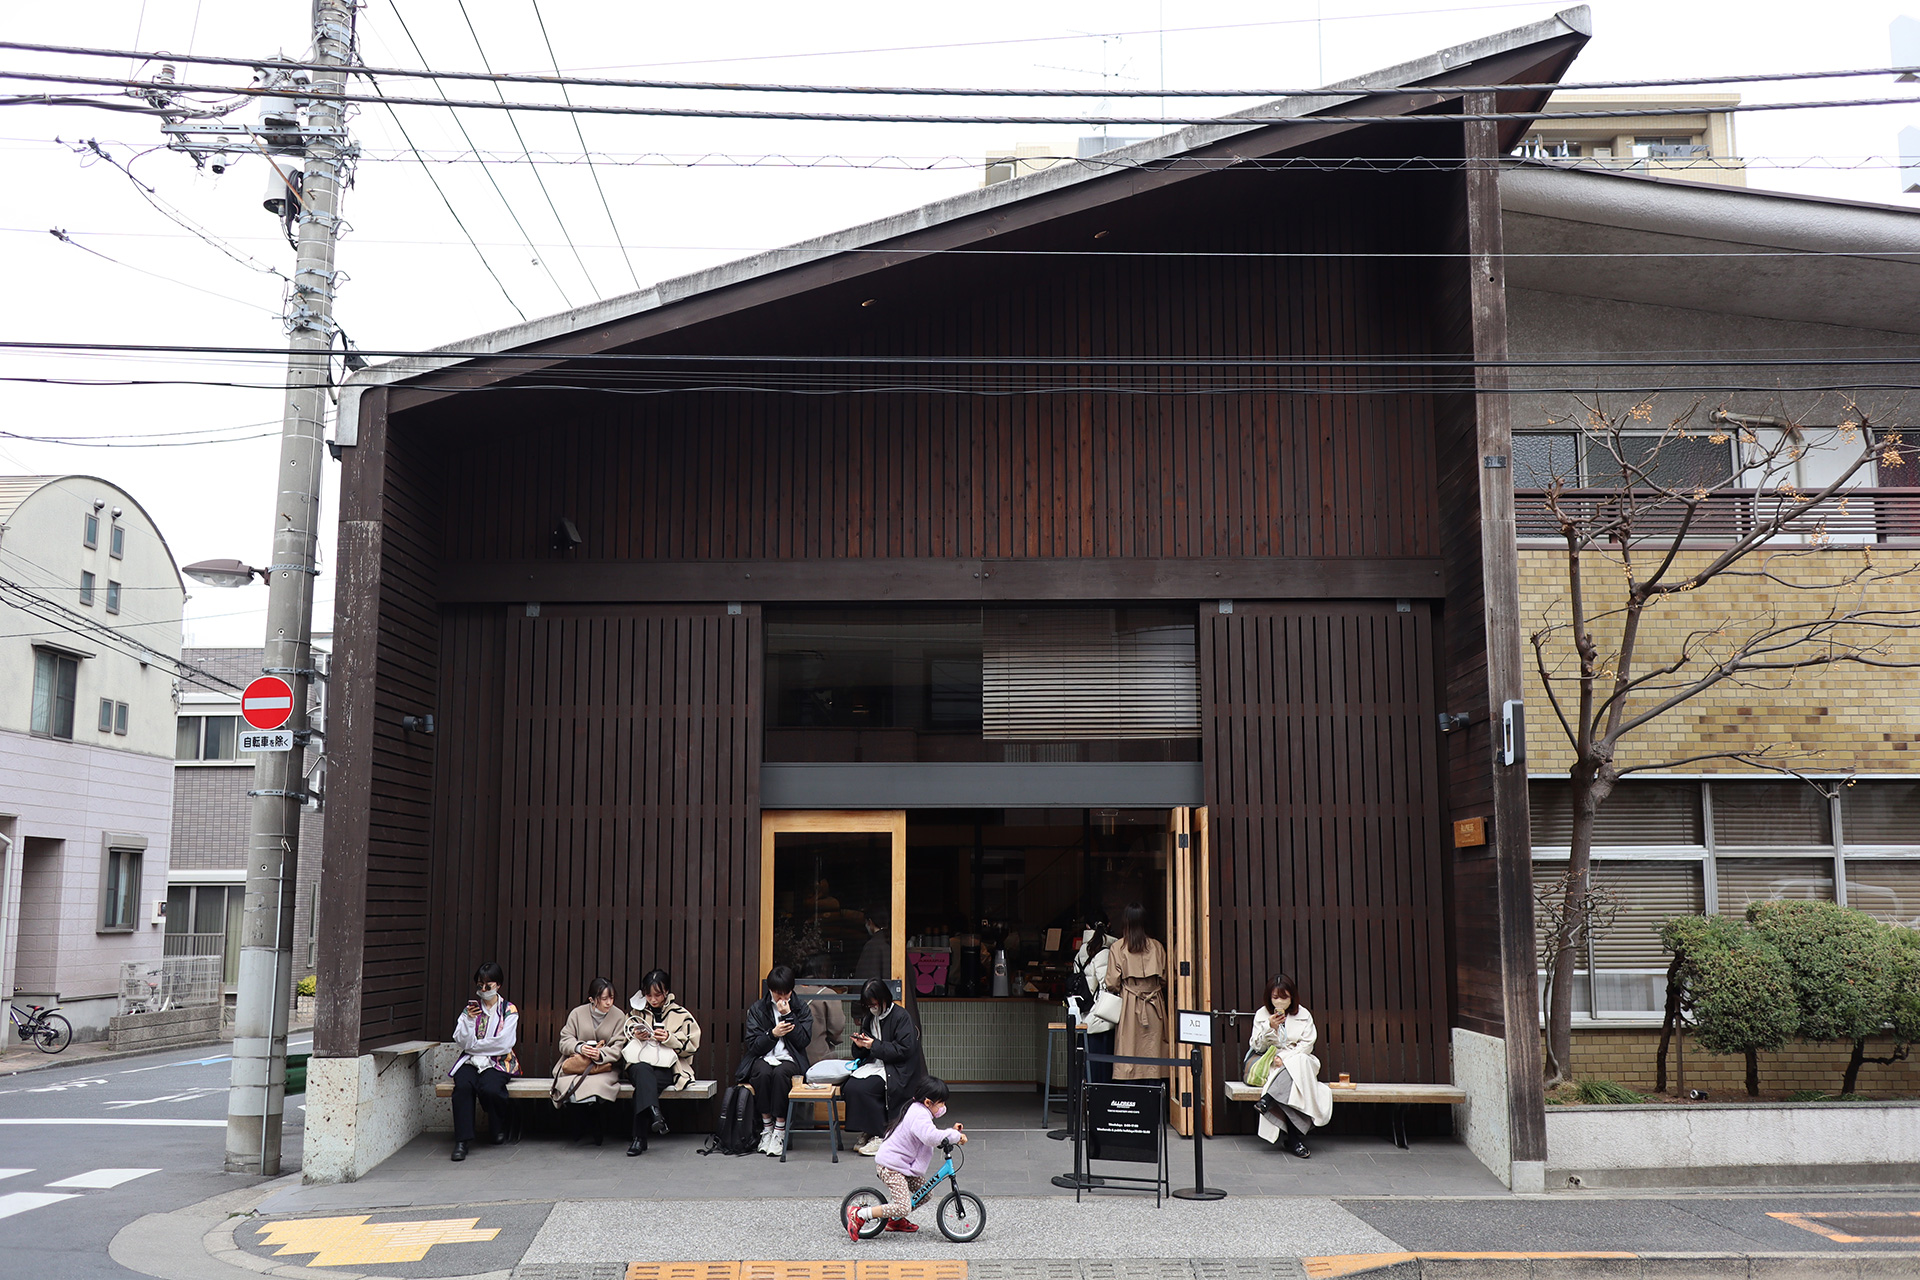 where-to-drink-great-coffee-in-tokyo-s-kiyosumi-shirakawa-neighborhood